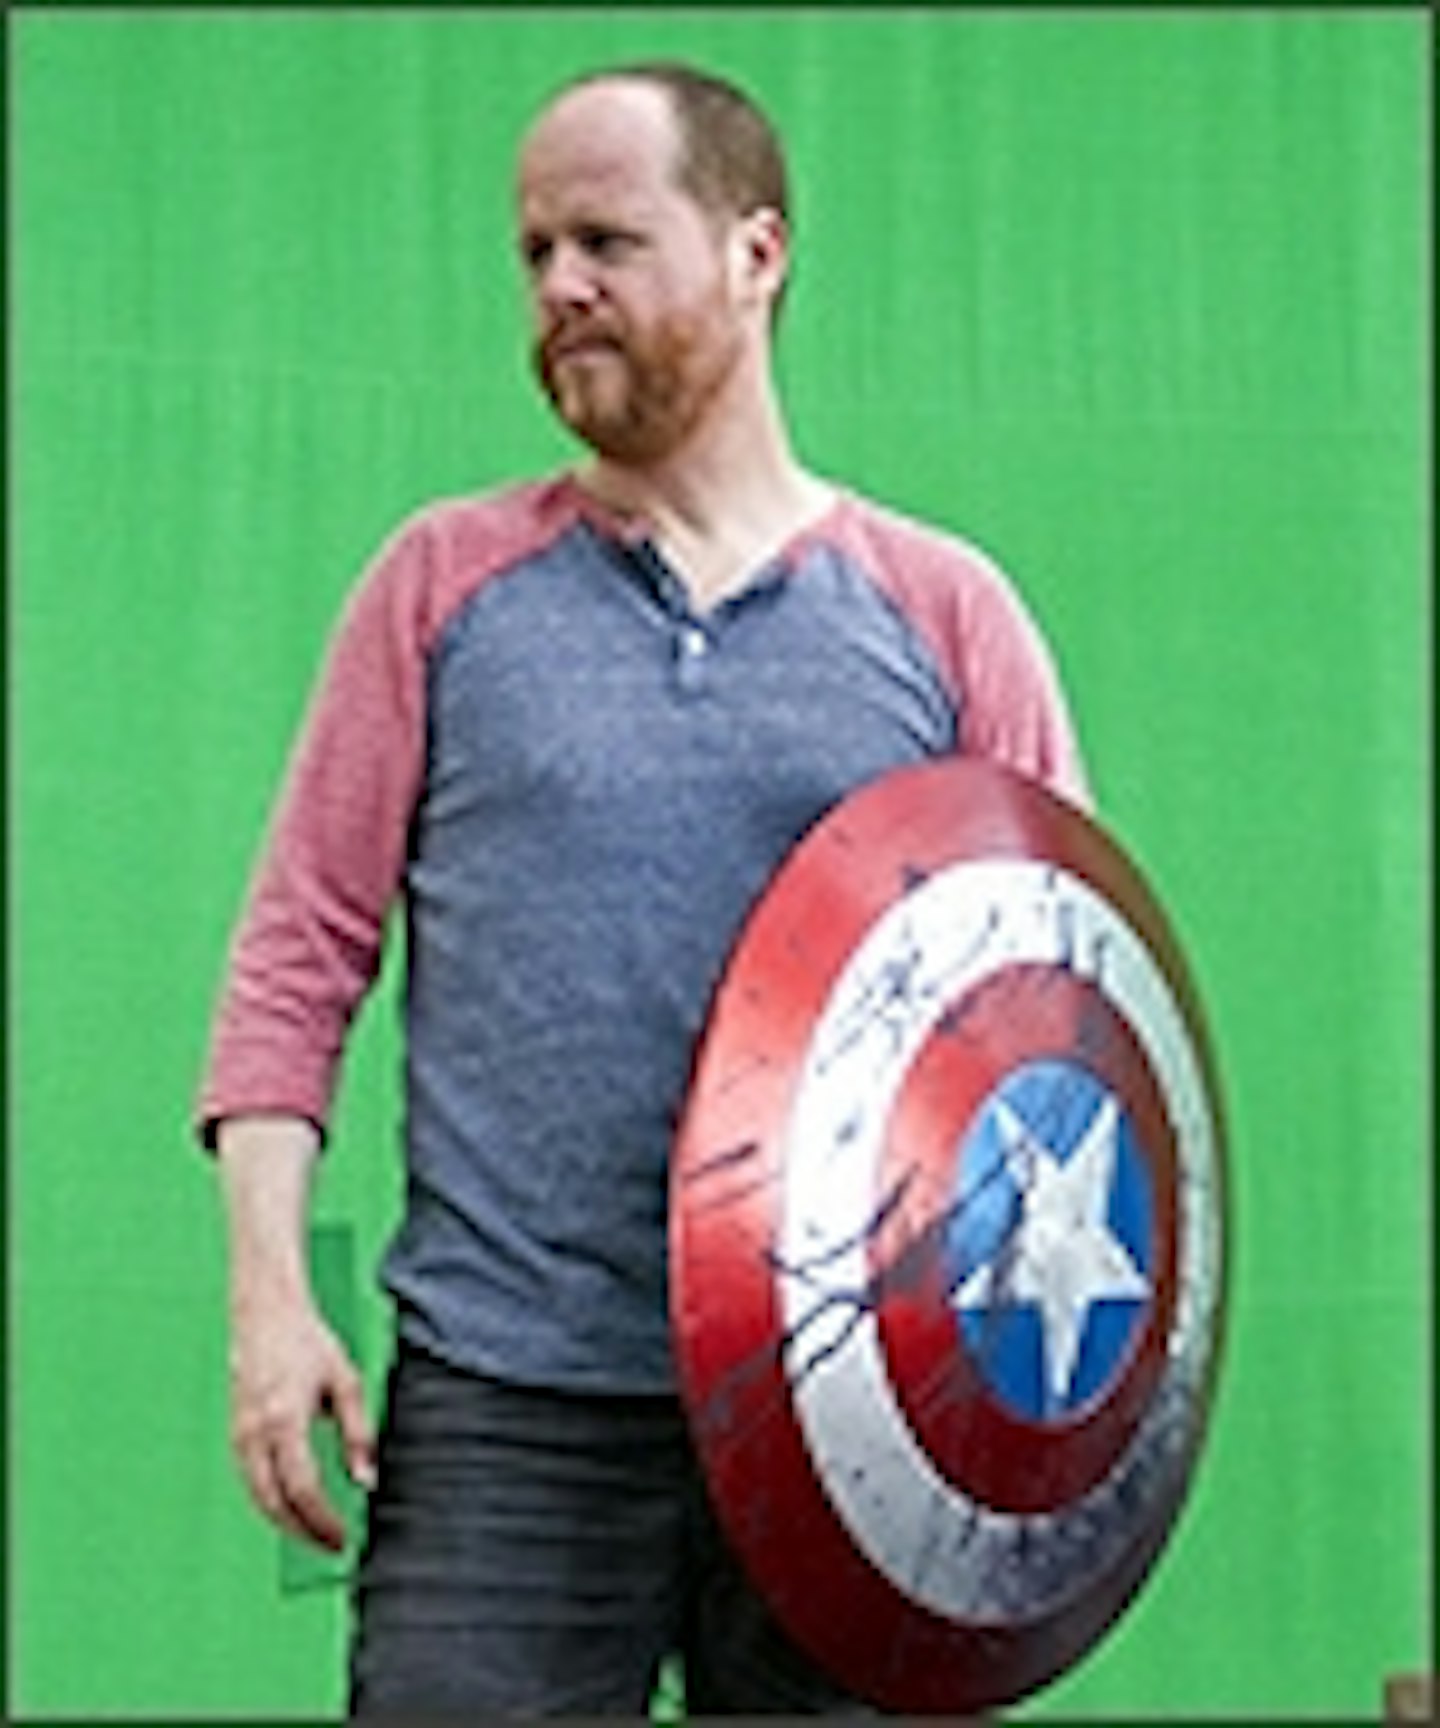 Avengers 2 To Shoot In February 2014